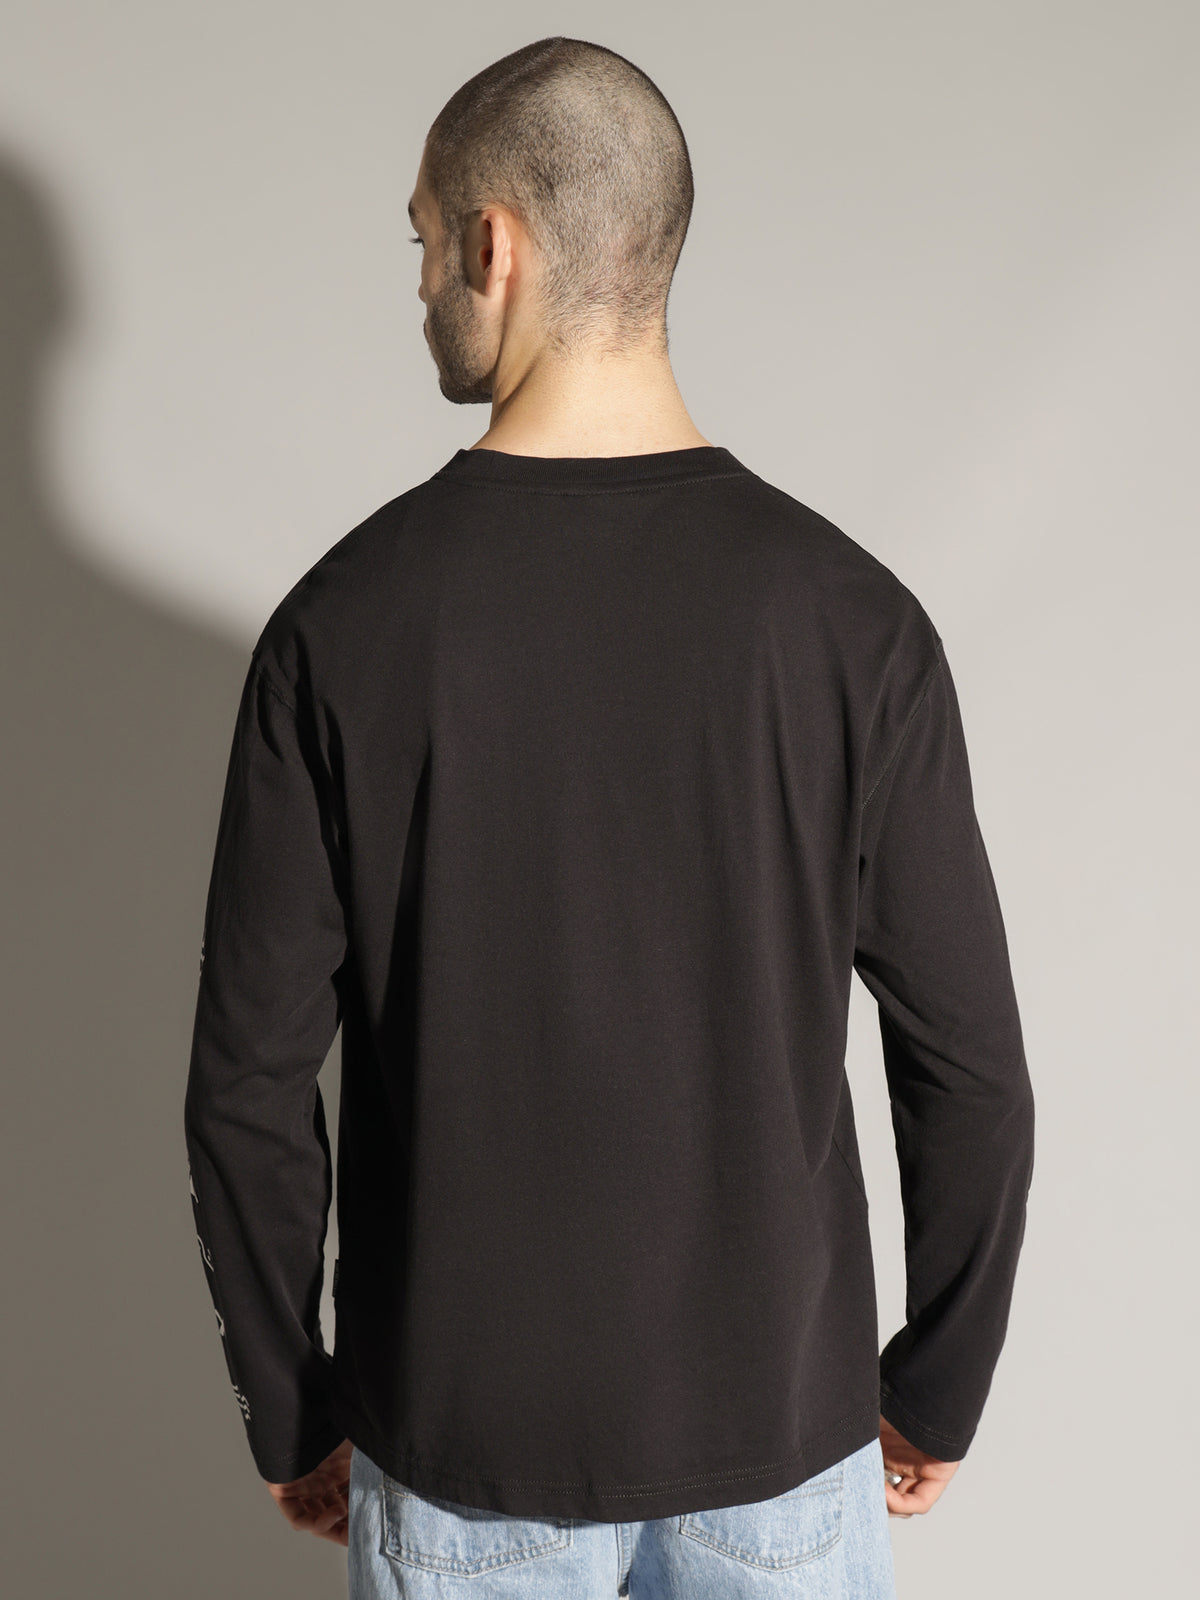 Pasilan Long Sleeve T-Shirt in Black